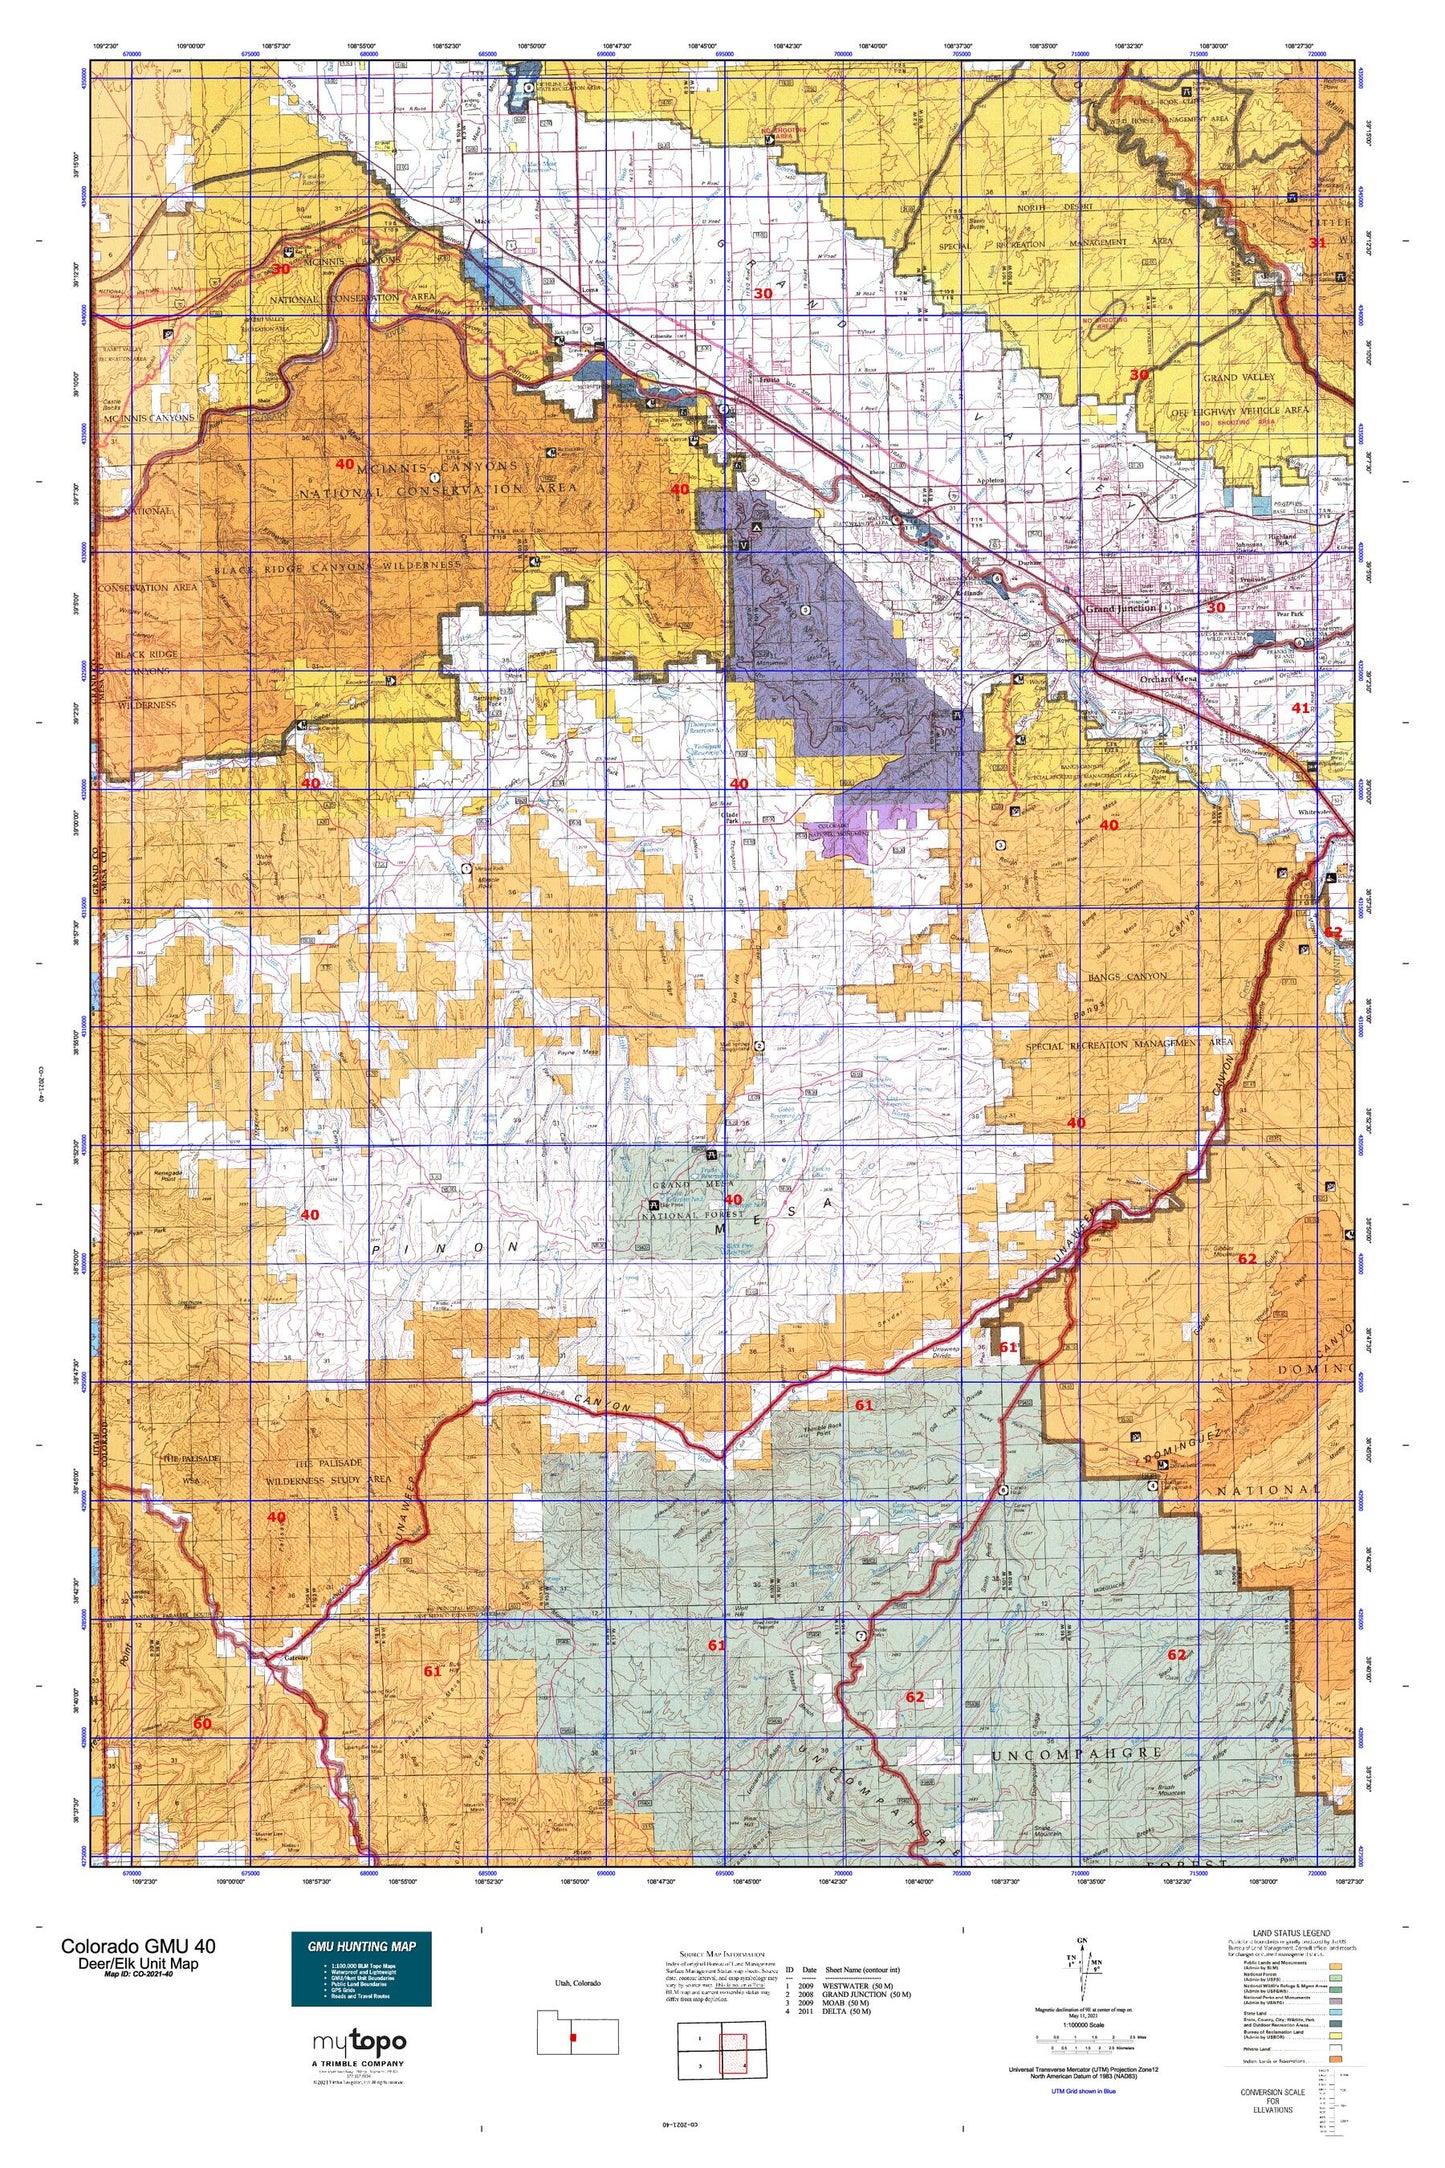 Colorado GMU 40 Map Image